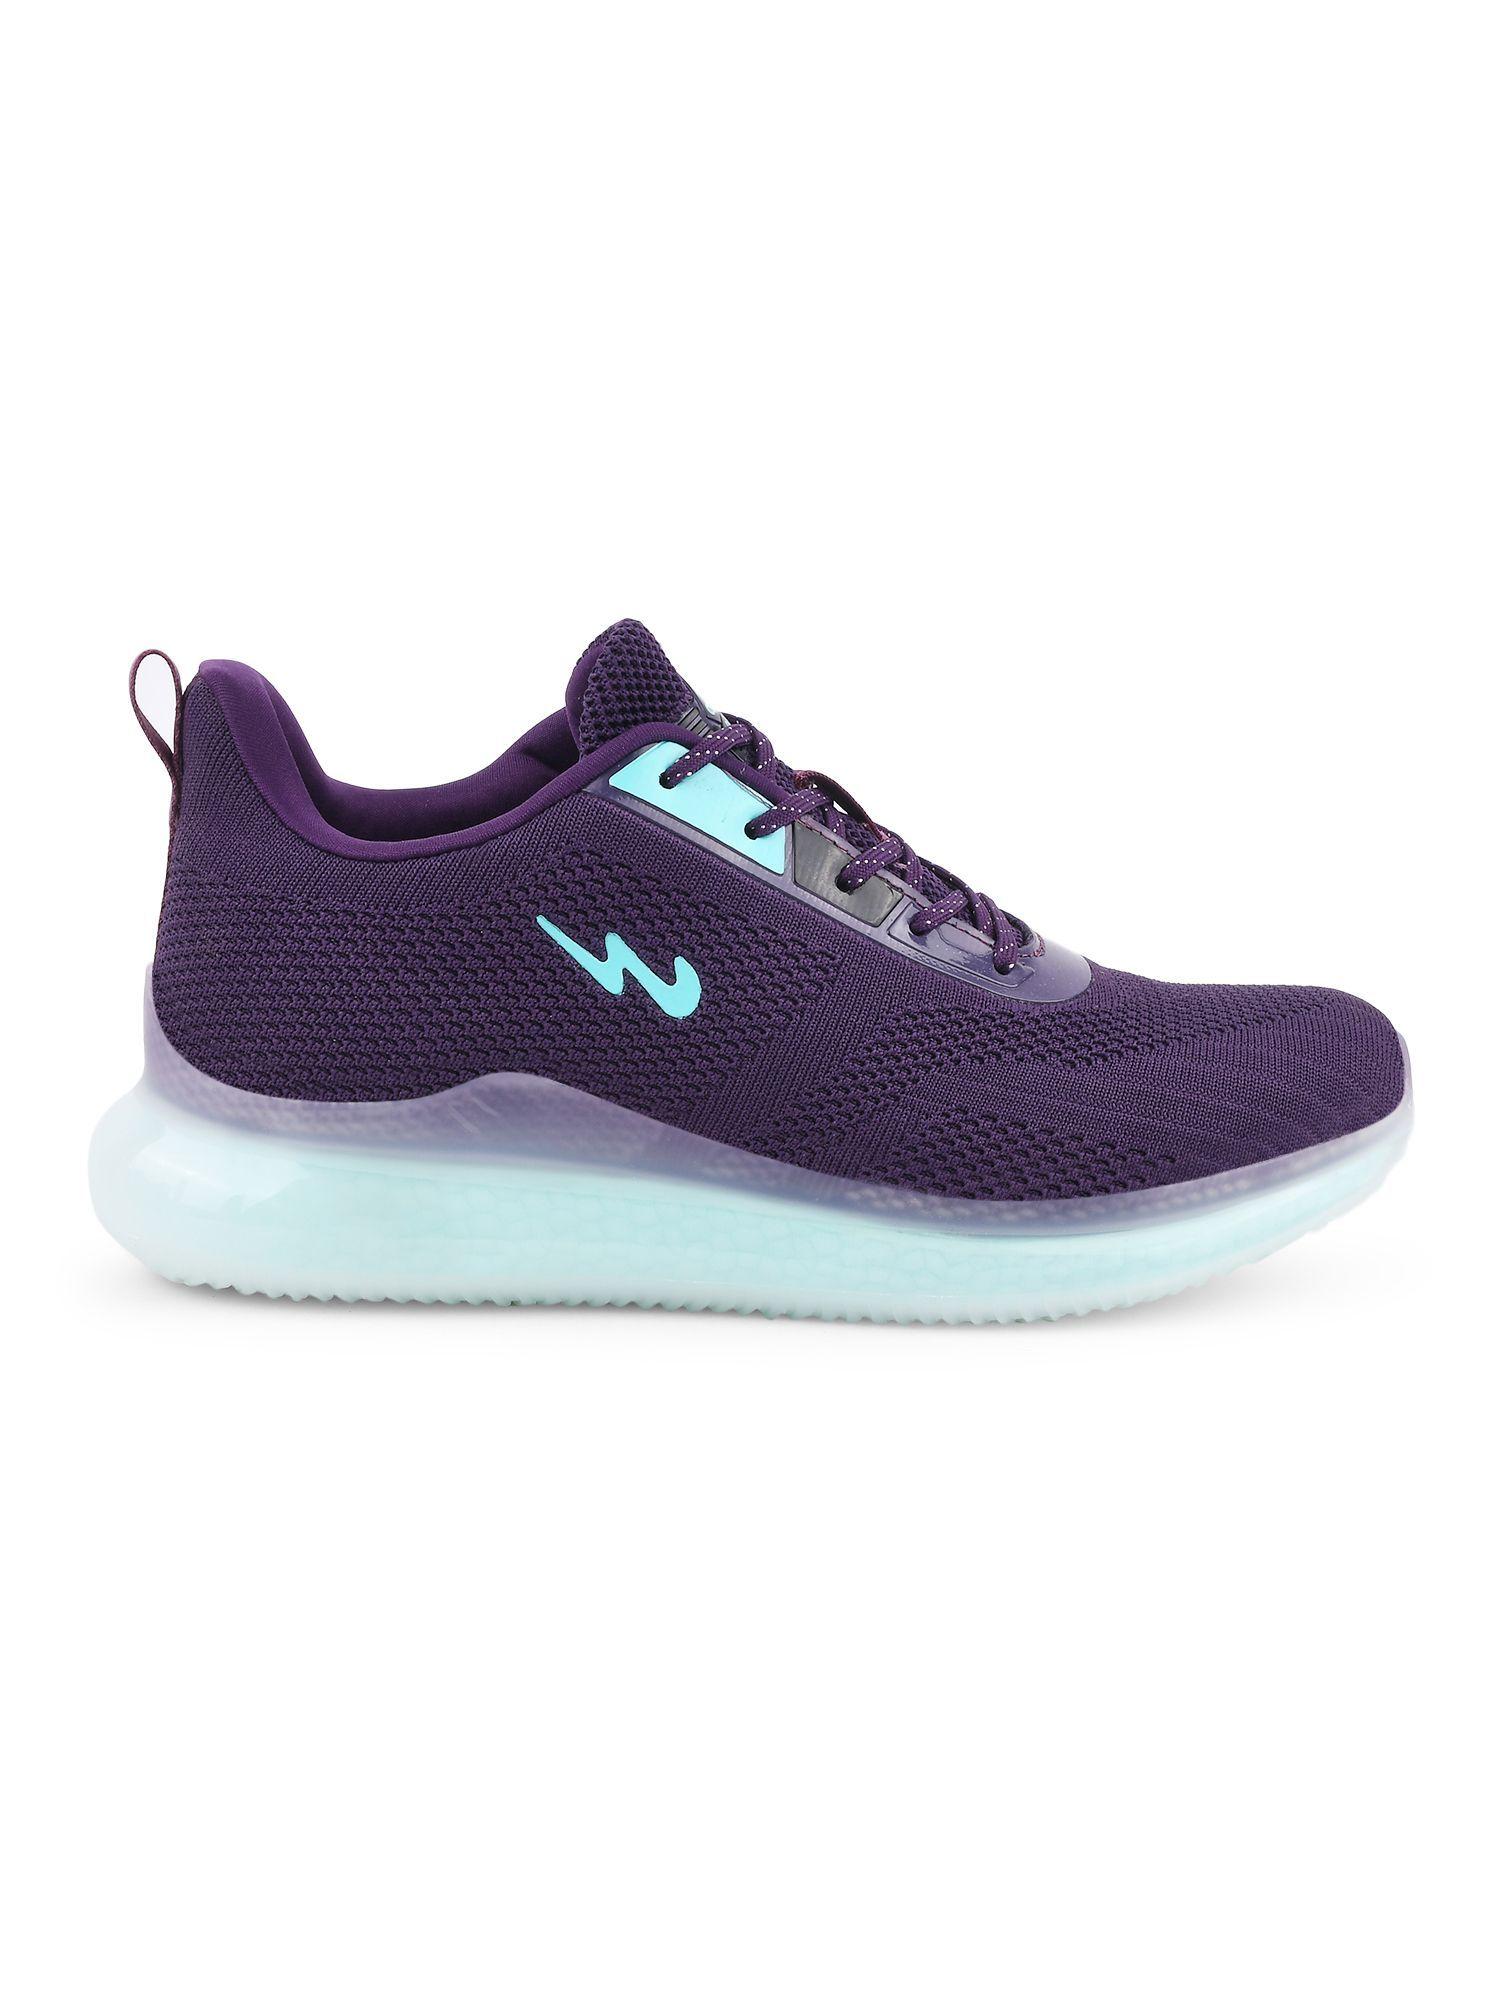 artemis purple running shoes for men